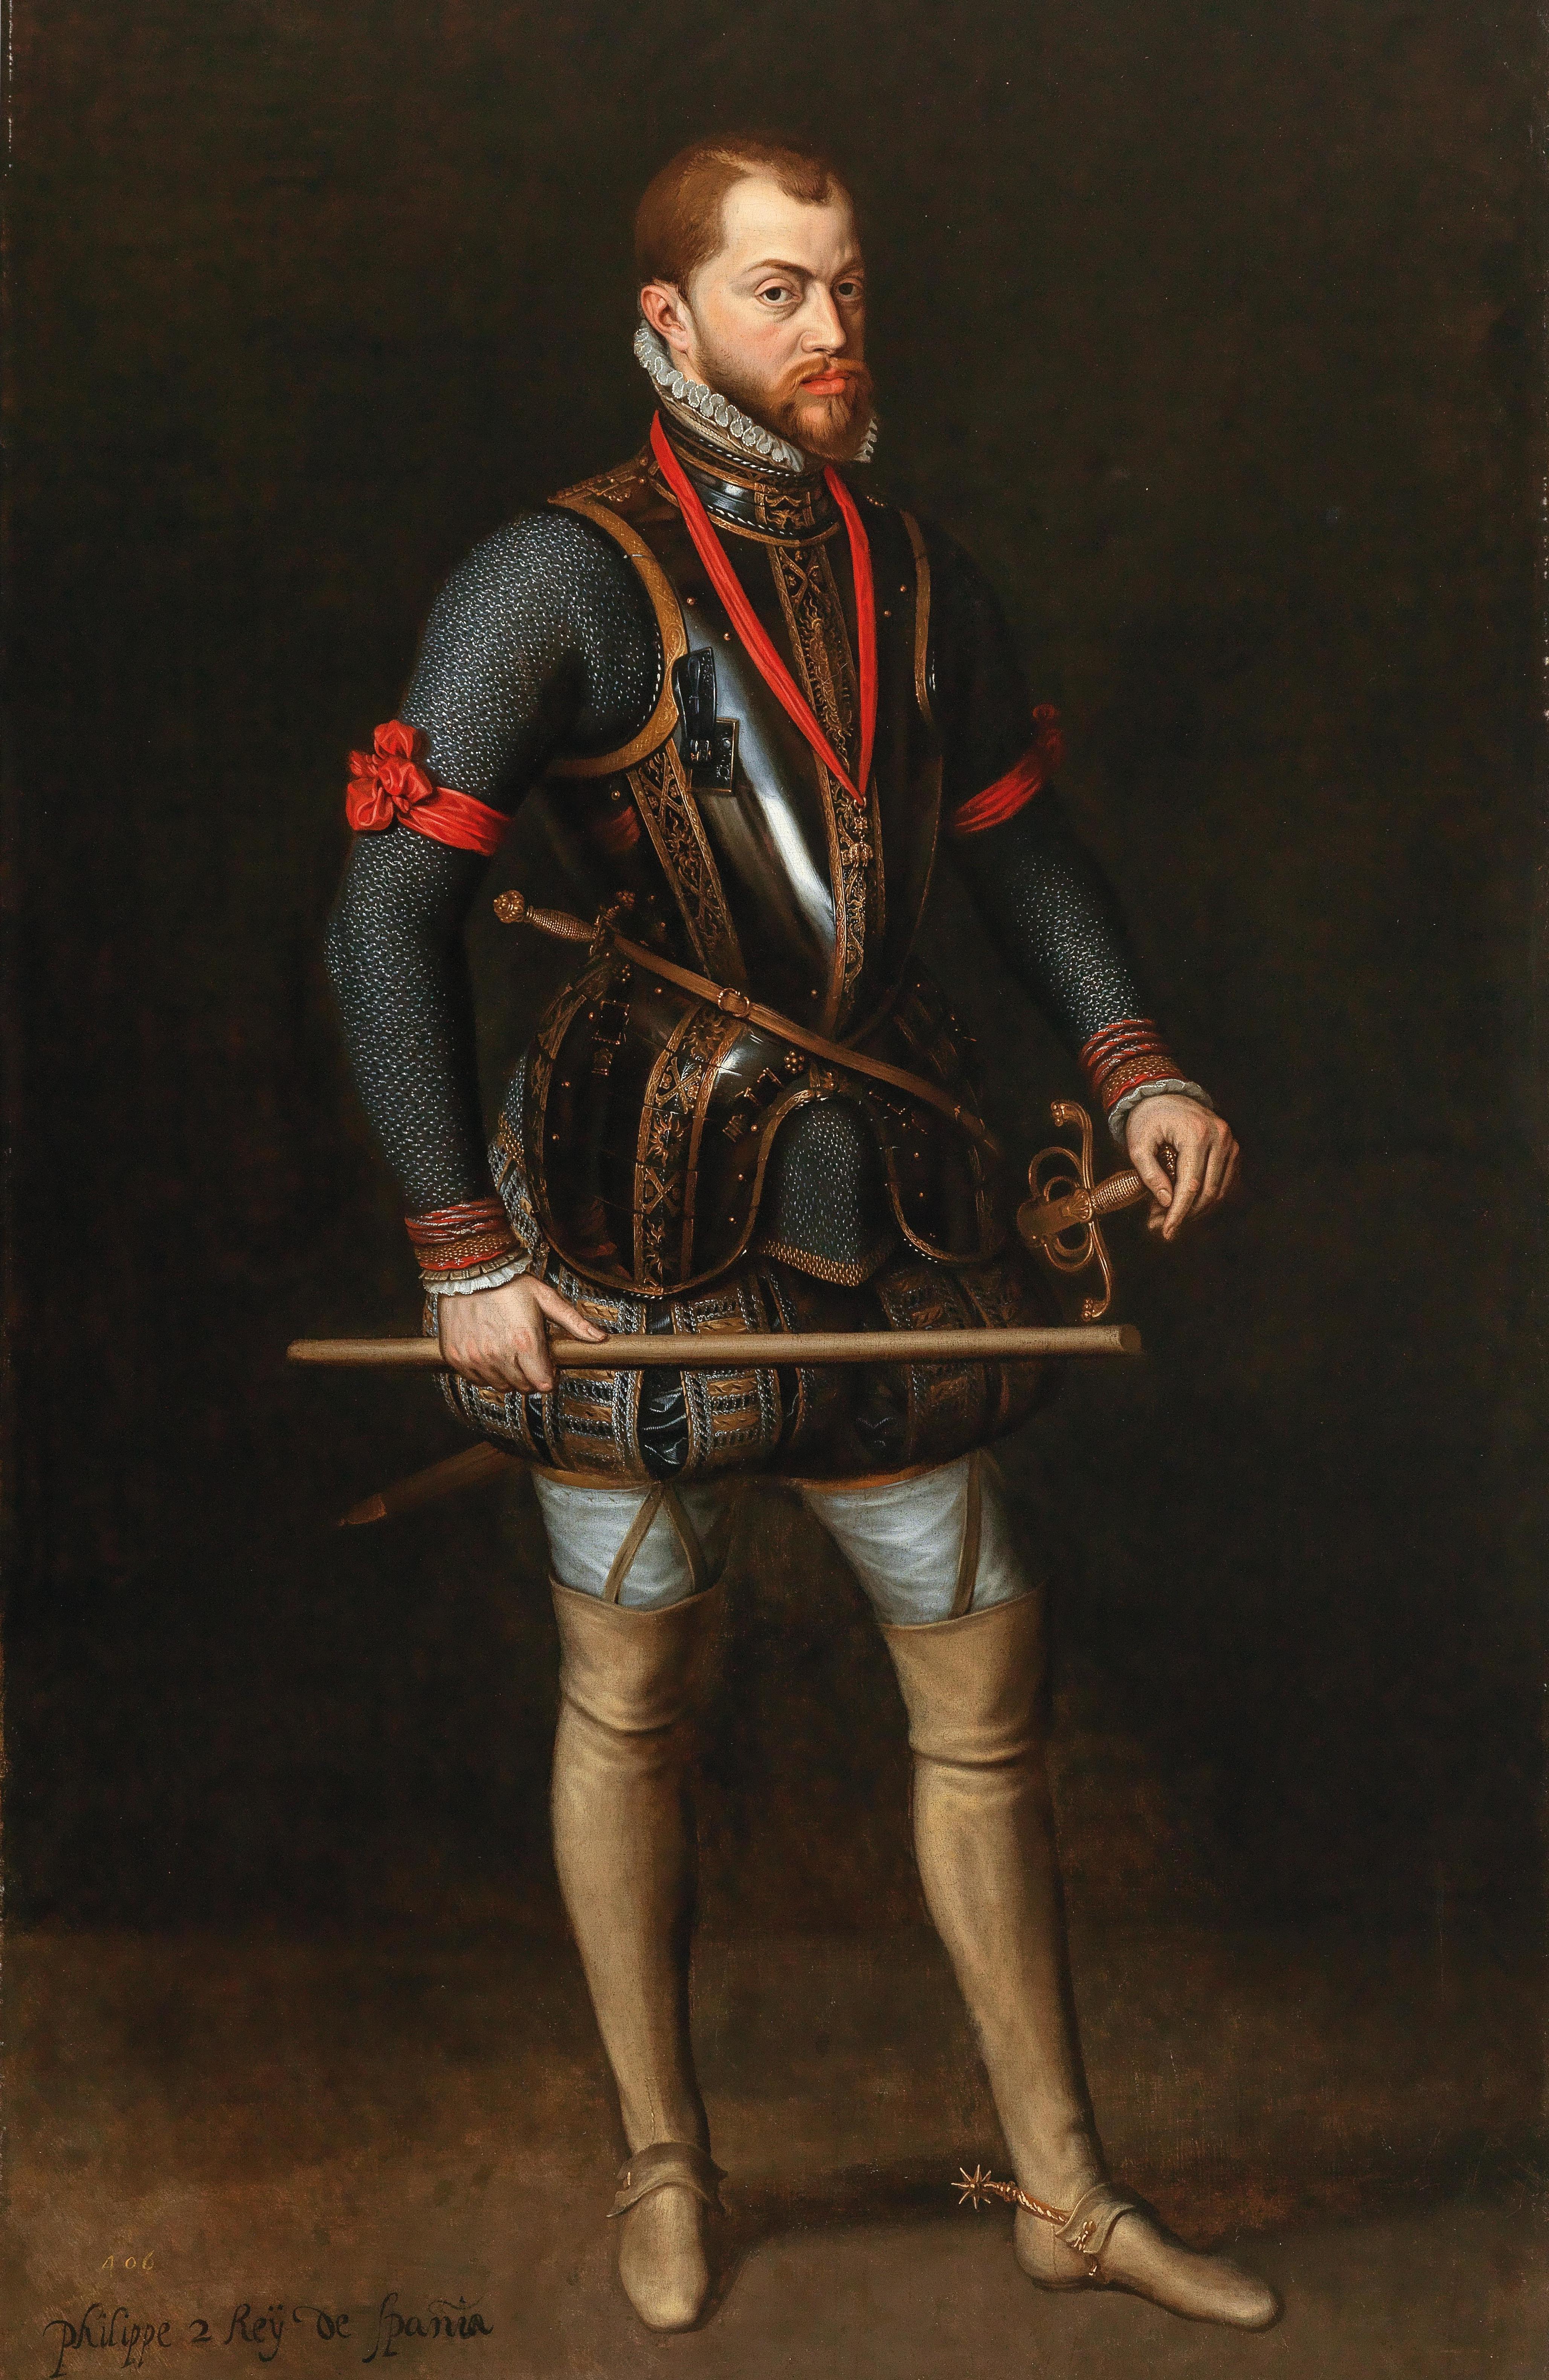 Viele neue Artikel verfügbar File:Philip II portrait (cropped).jpg - Wikimedia Commons